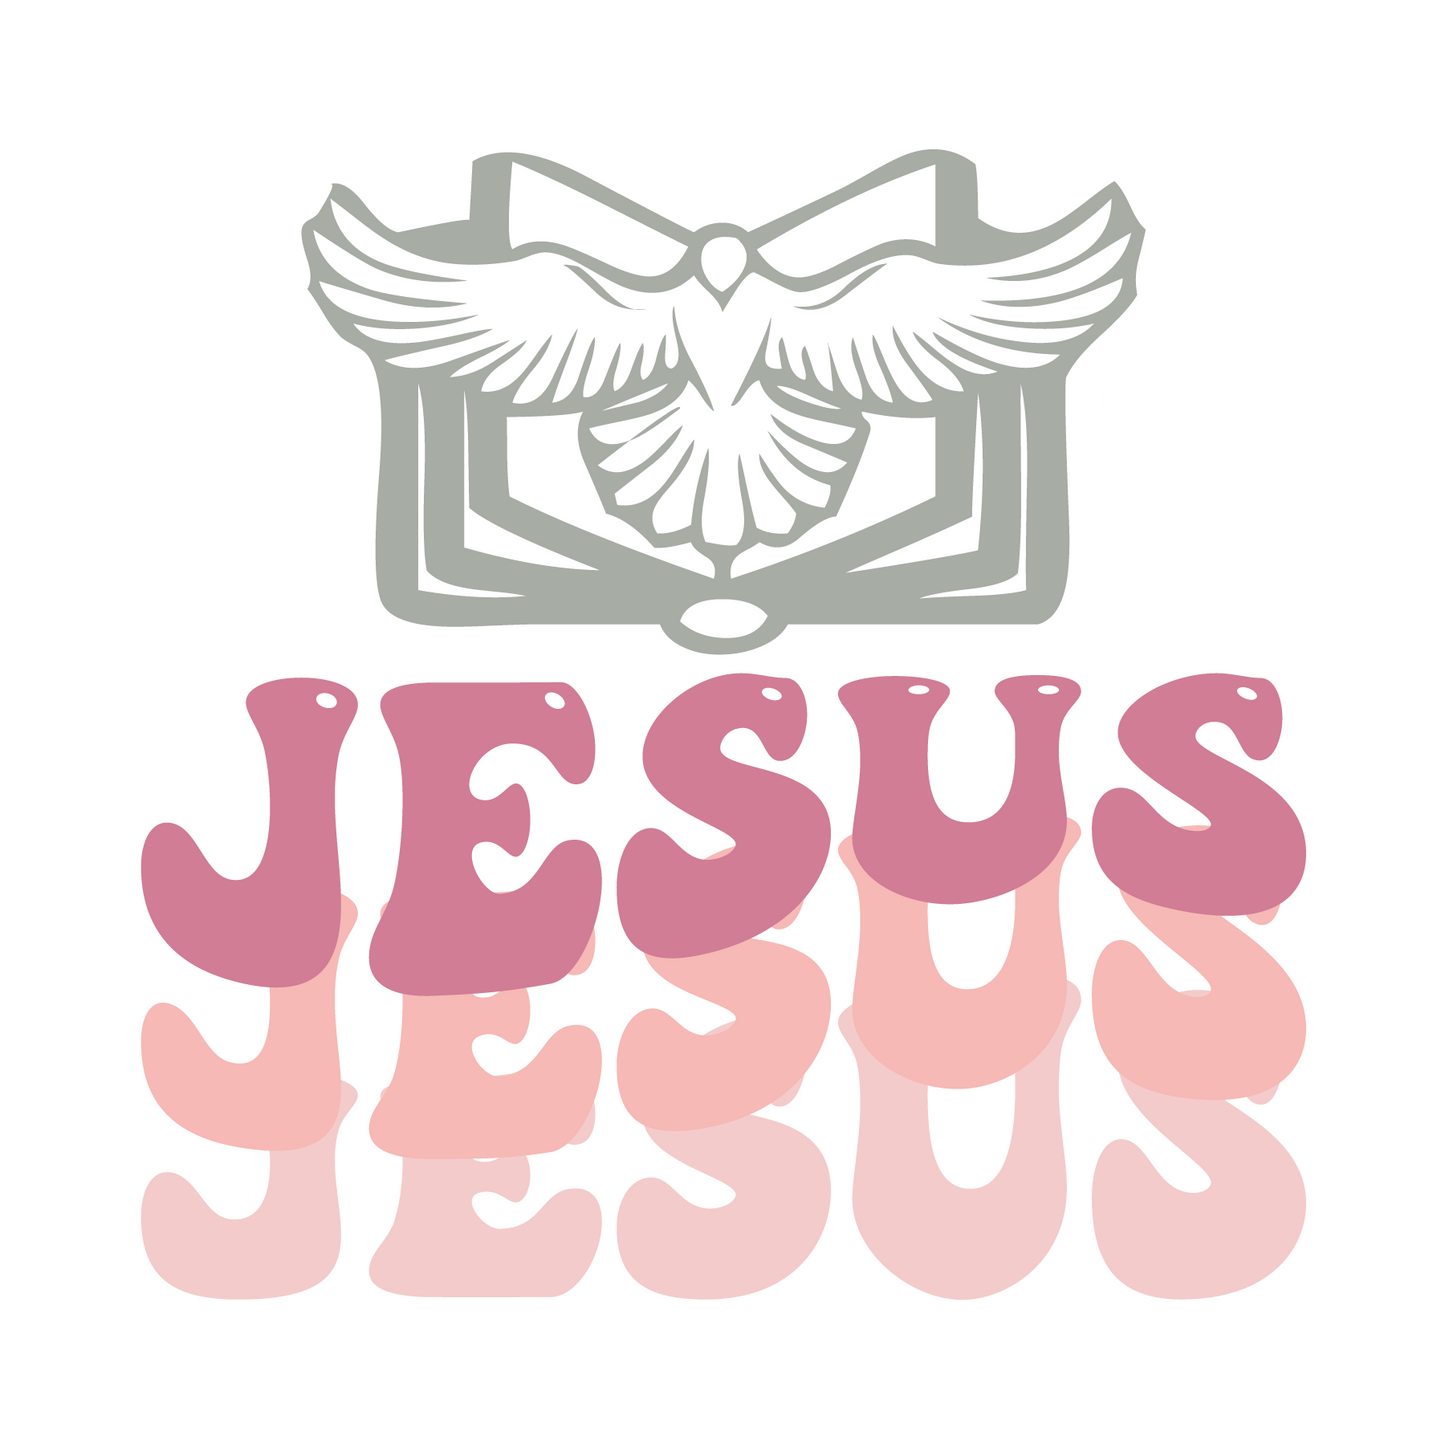 Inspirational Quote "Jesus, Sticker Gift" Motivational Sticker Vinyl Decal Motivation Stickers- 5" Vinyl Sticker Waterproof